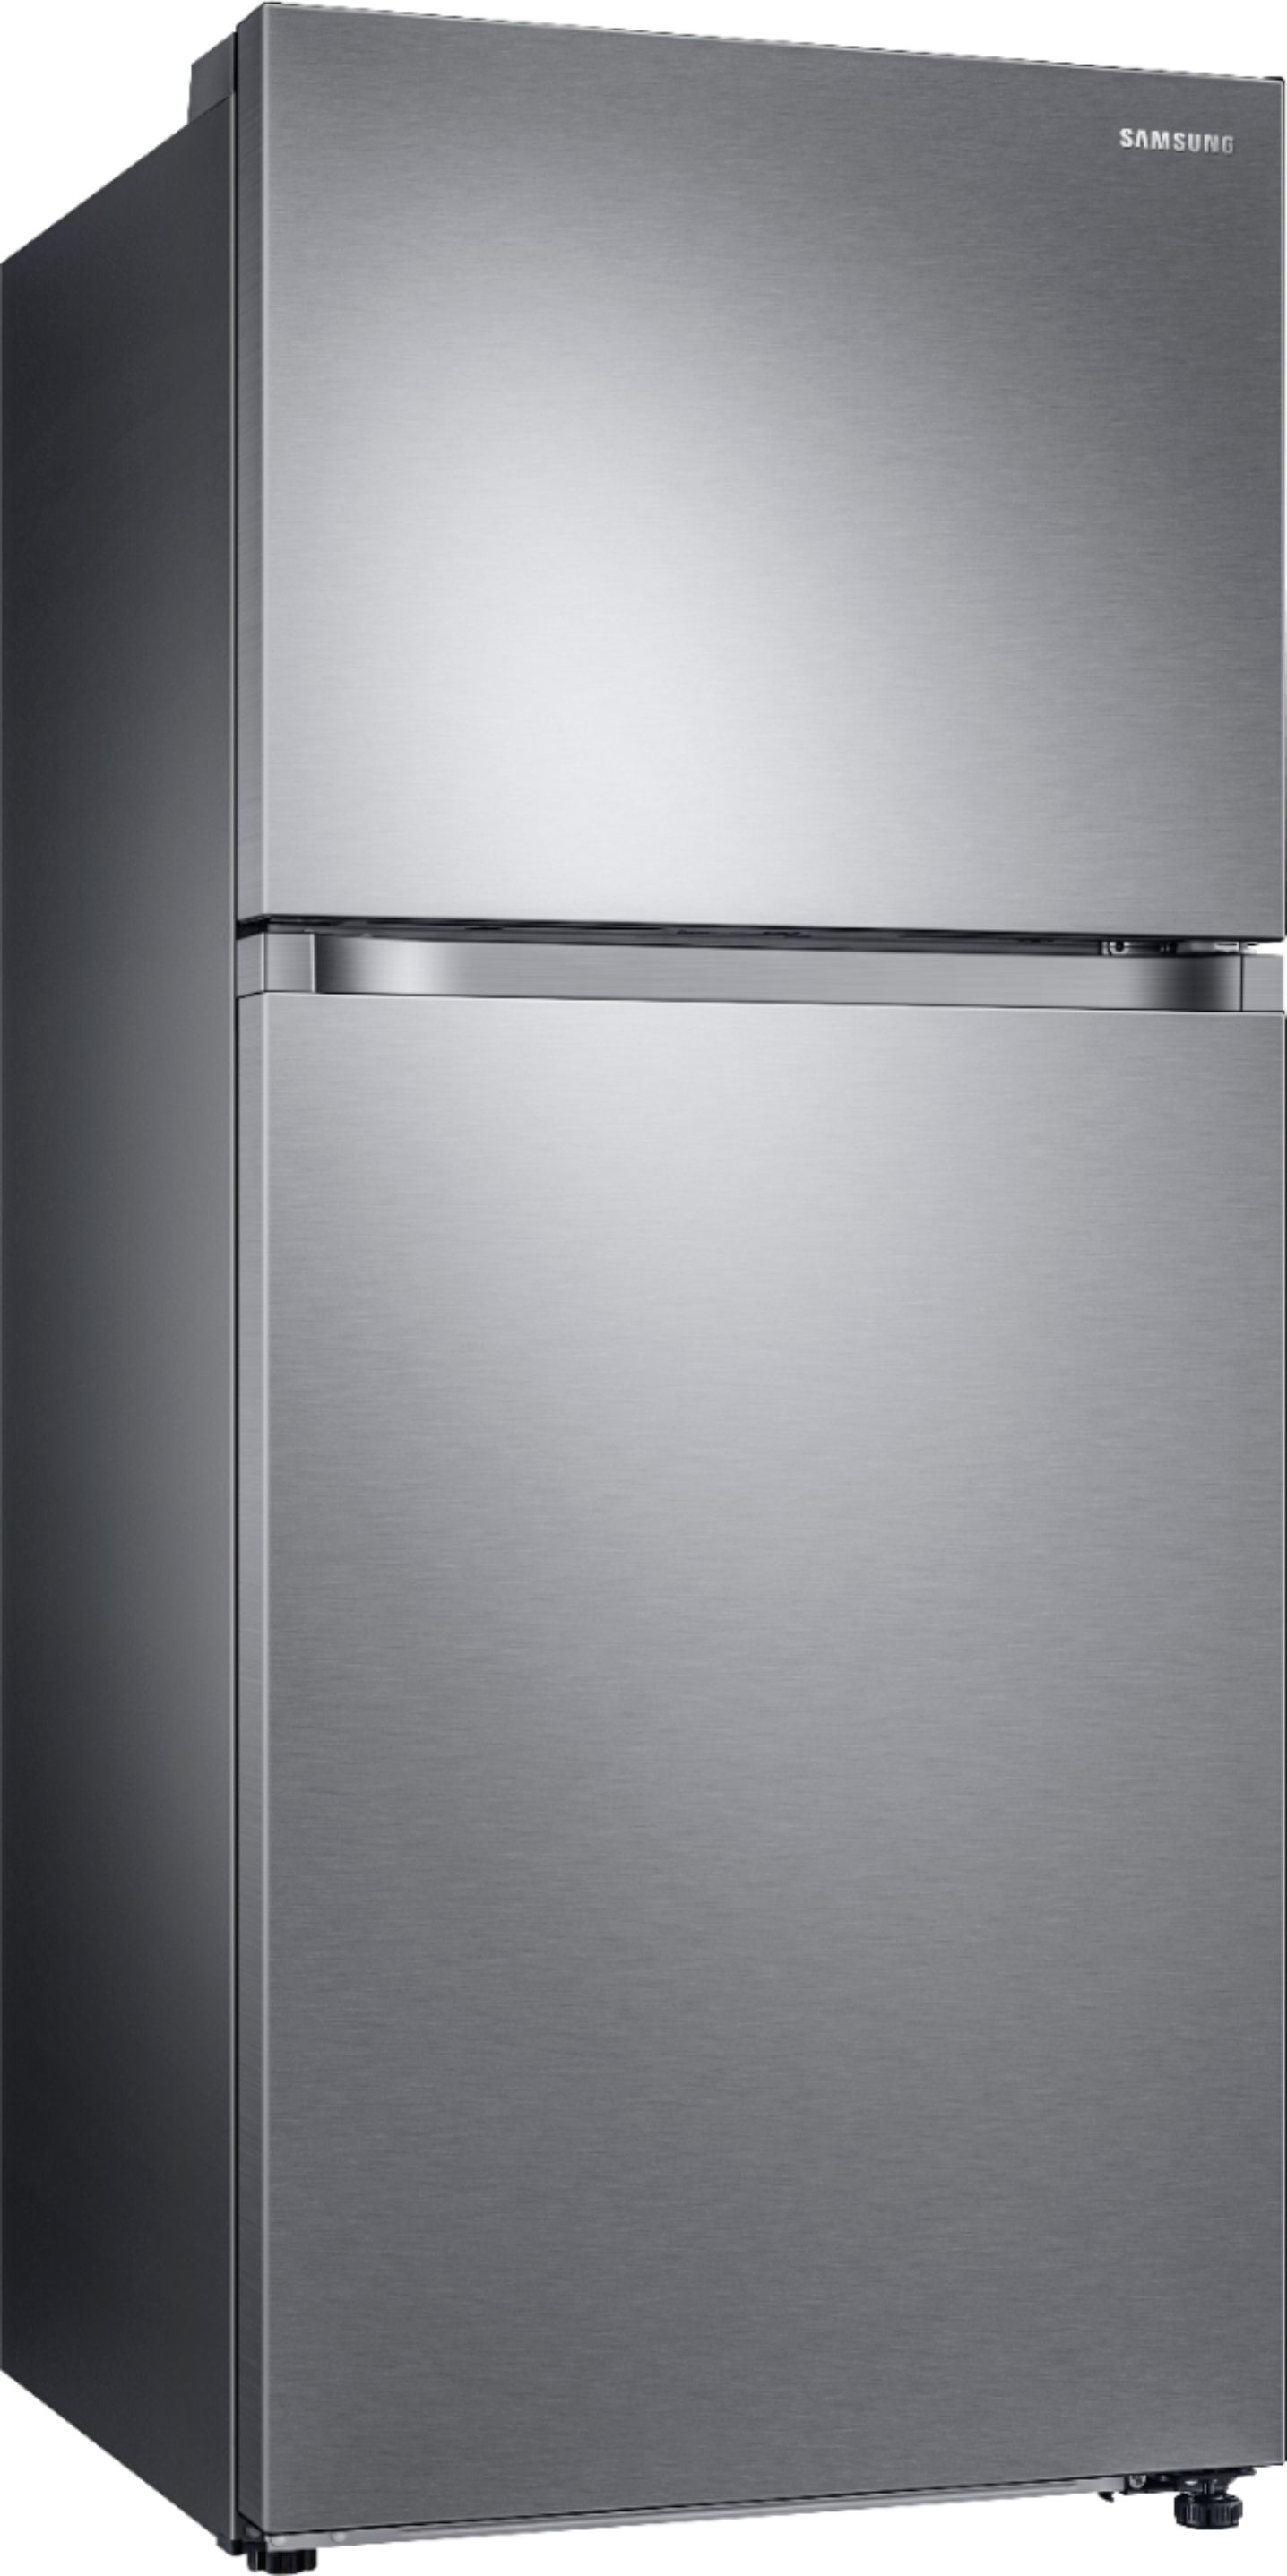 Customer Reviews: Samsung 17.6 cu. ft. Top-Freezer Refrigerator with ...